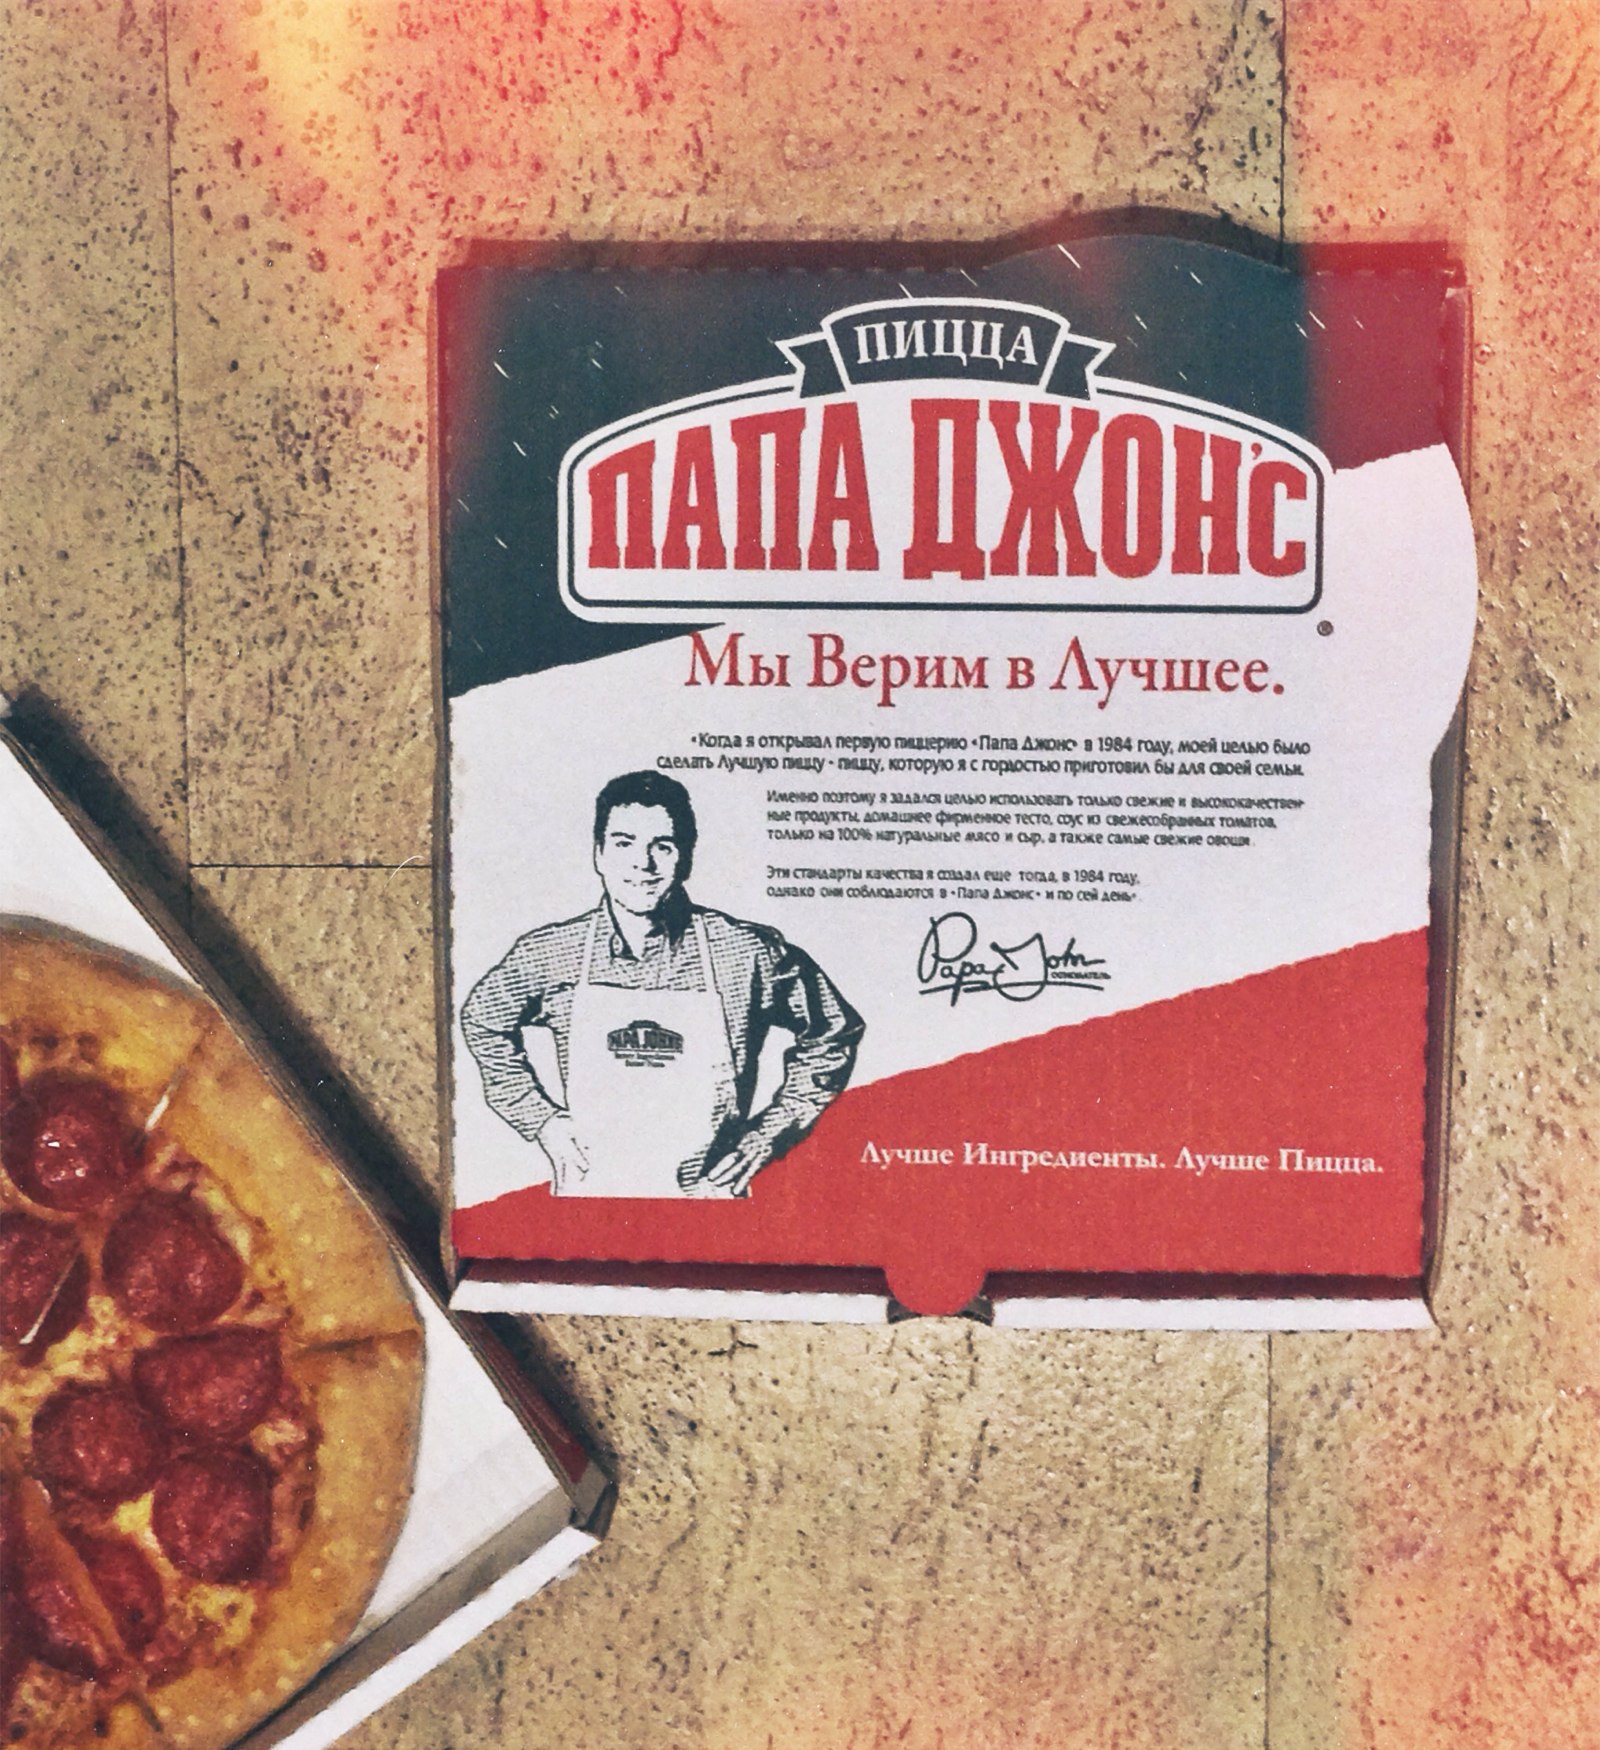 мясная пицца папа джонс состав фото 94